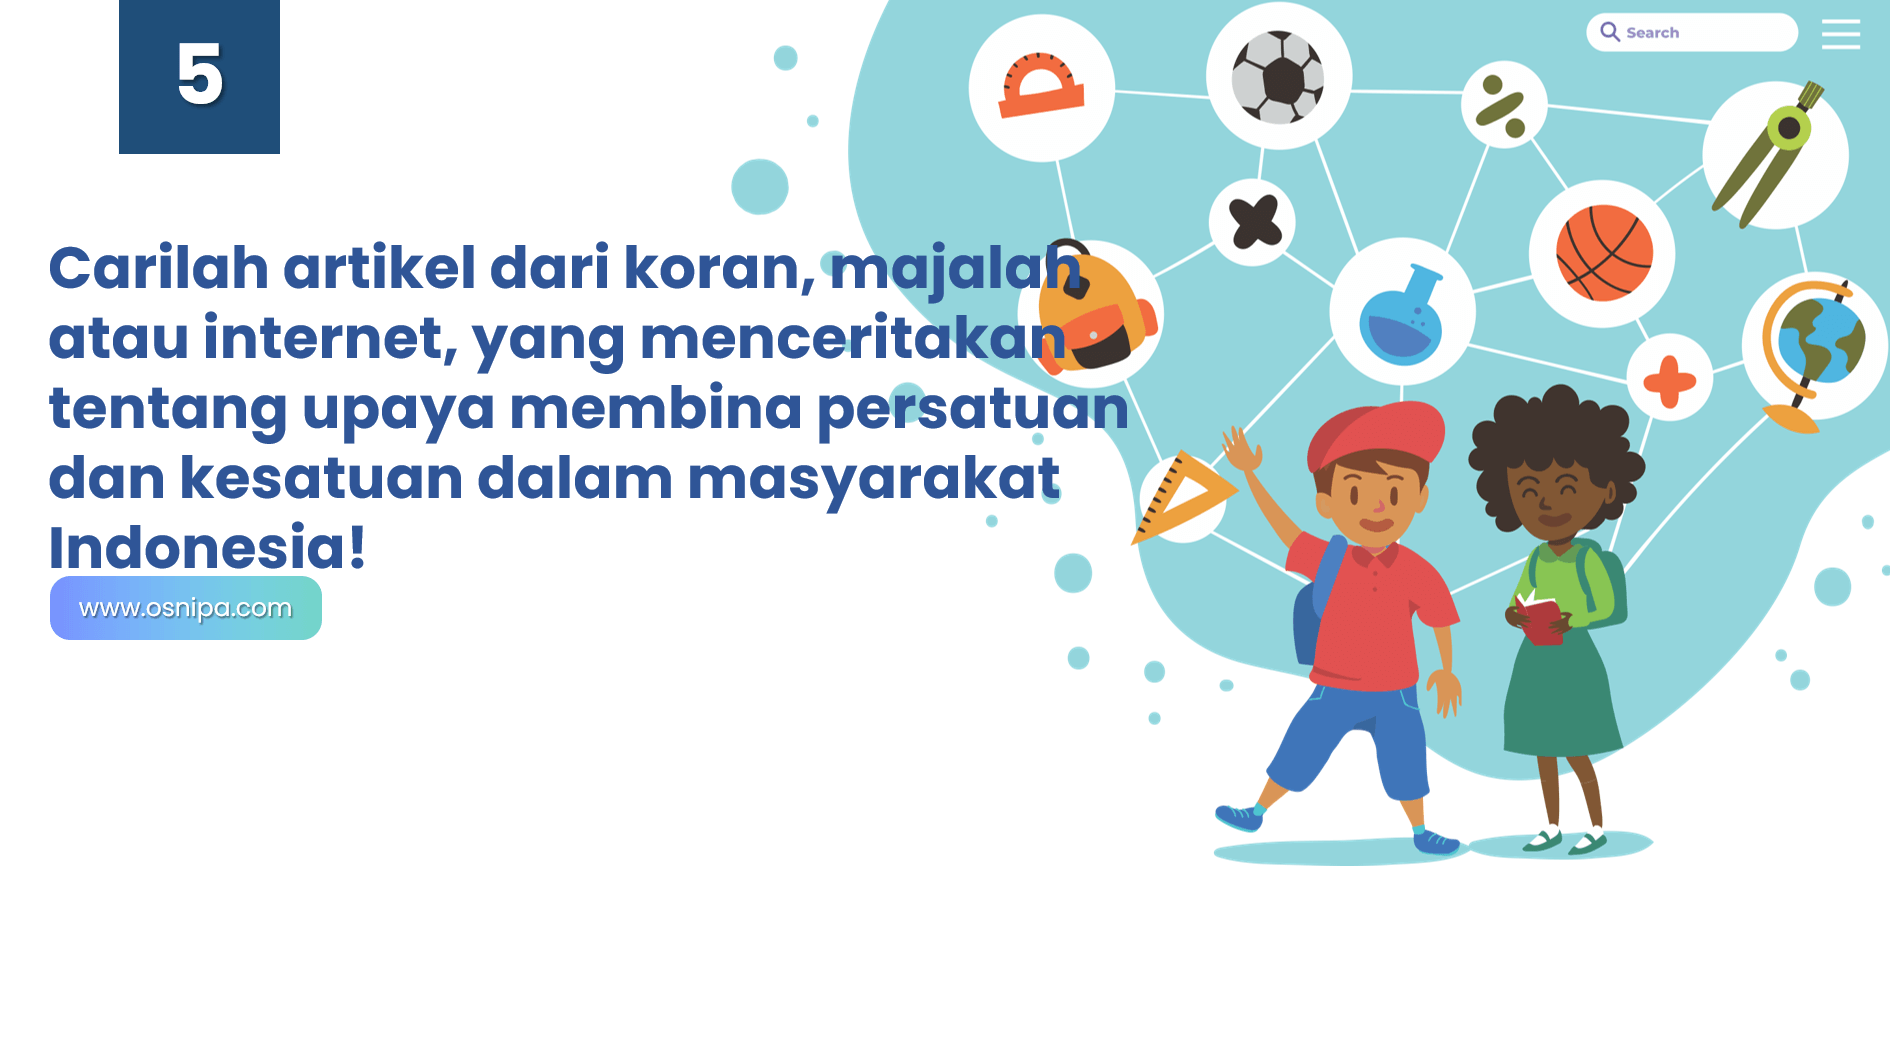 Carilah artikel dari koran, majalah atau internet, yang menceritakan tentang upaya membina persatuan dan kesatuan dalam masyarakat Indonesia!